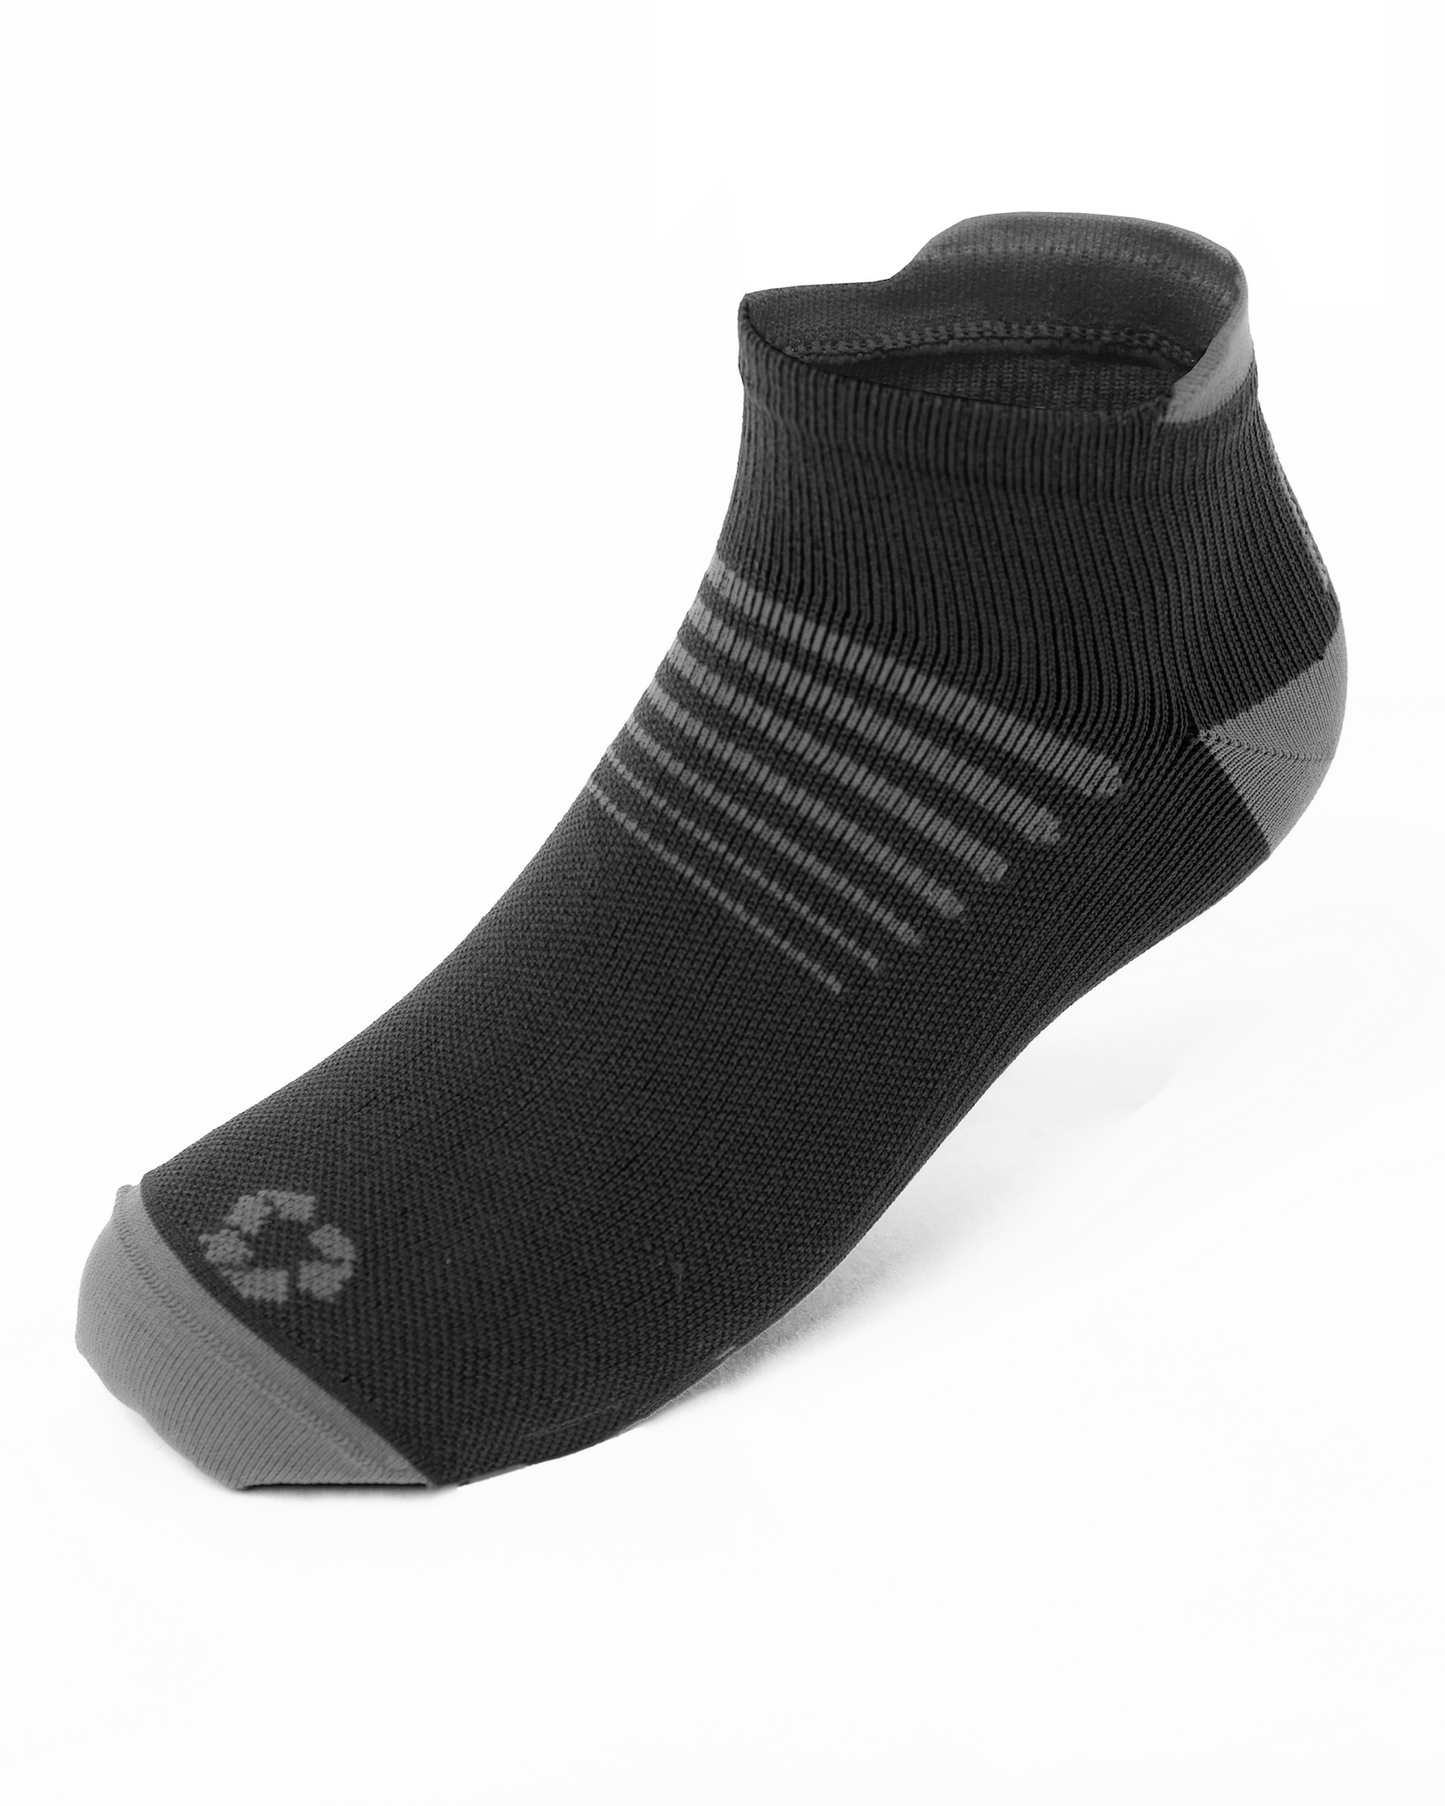 Recycled Low Cut Performance Unisex Socks - Black